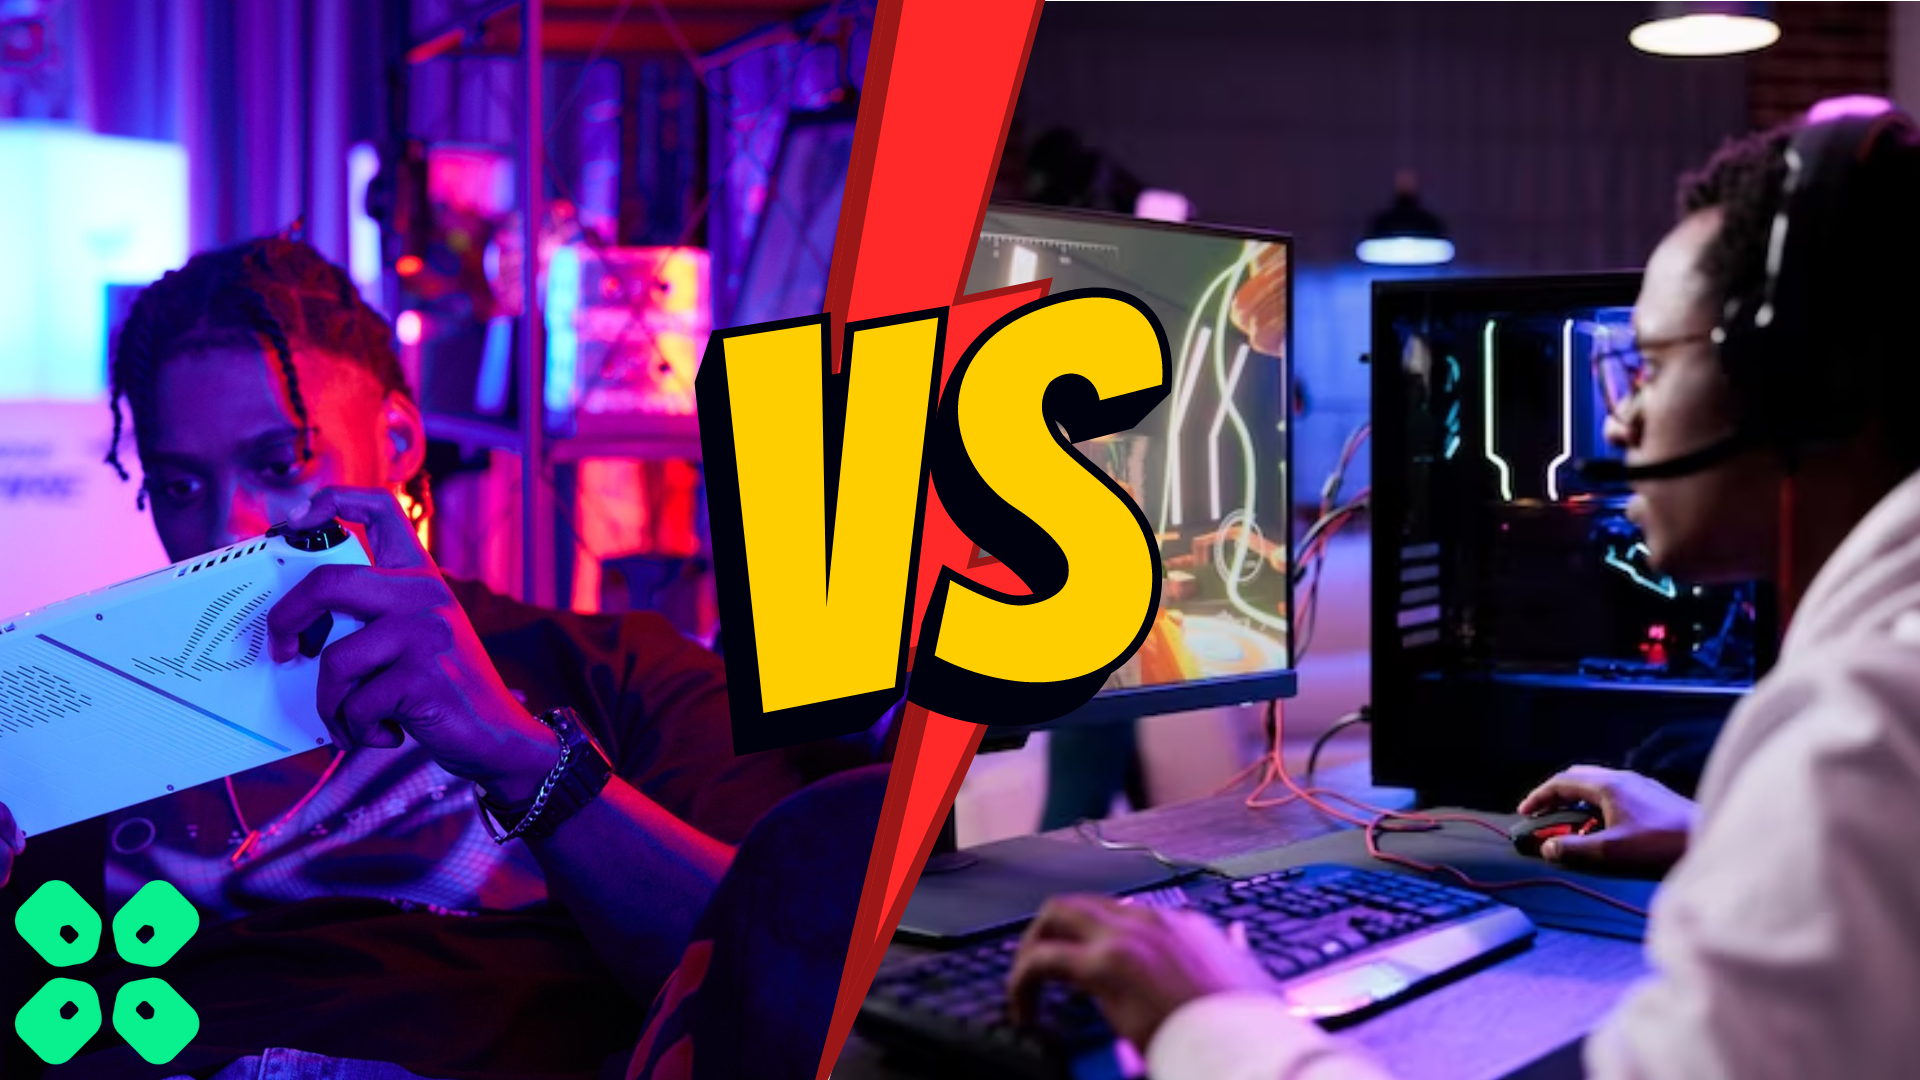 PC vs Handheld Gaming